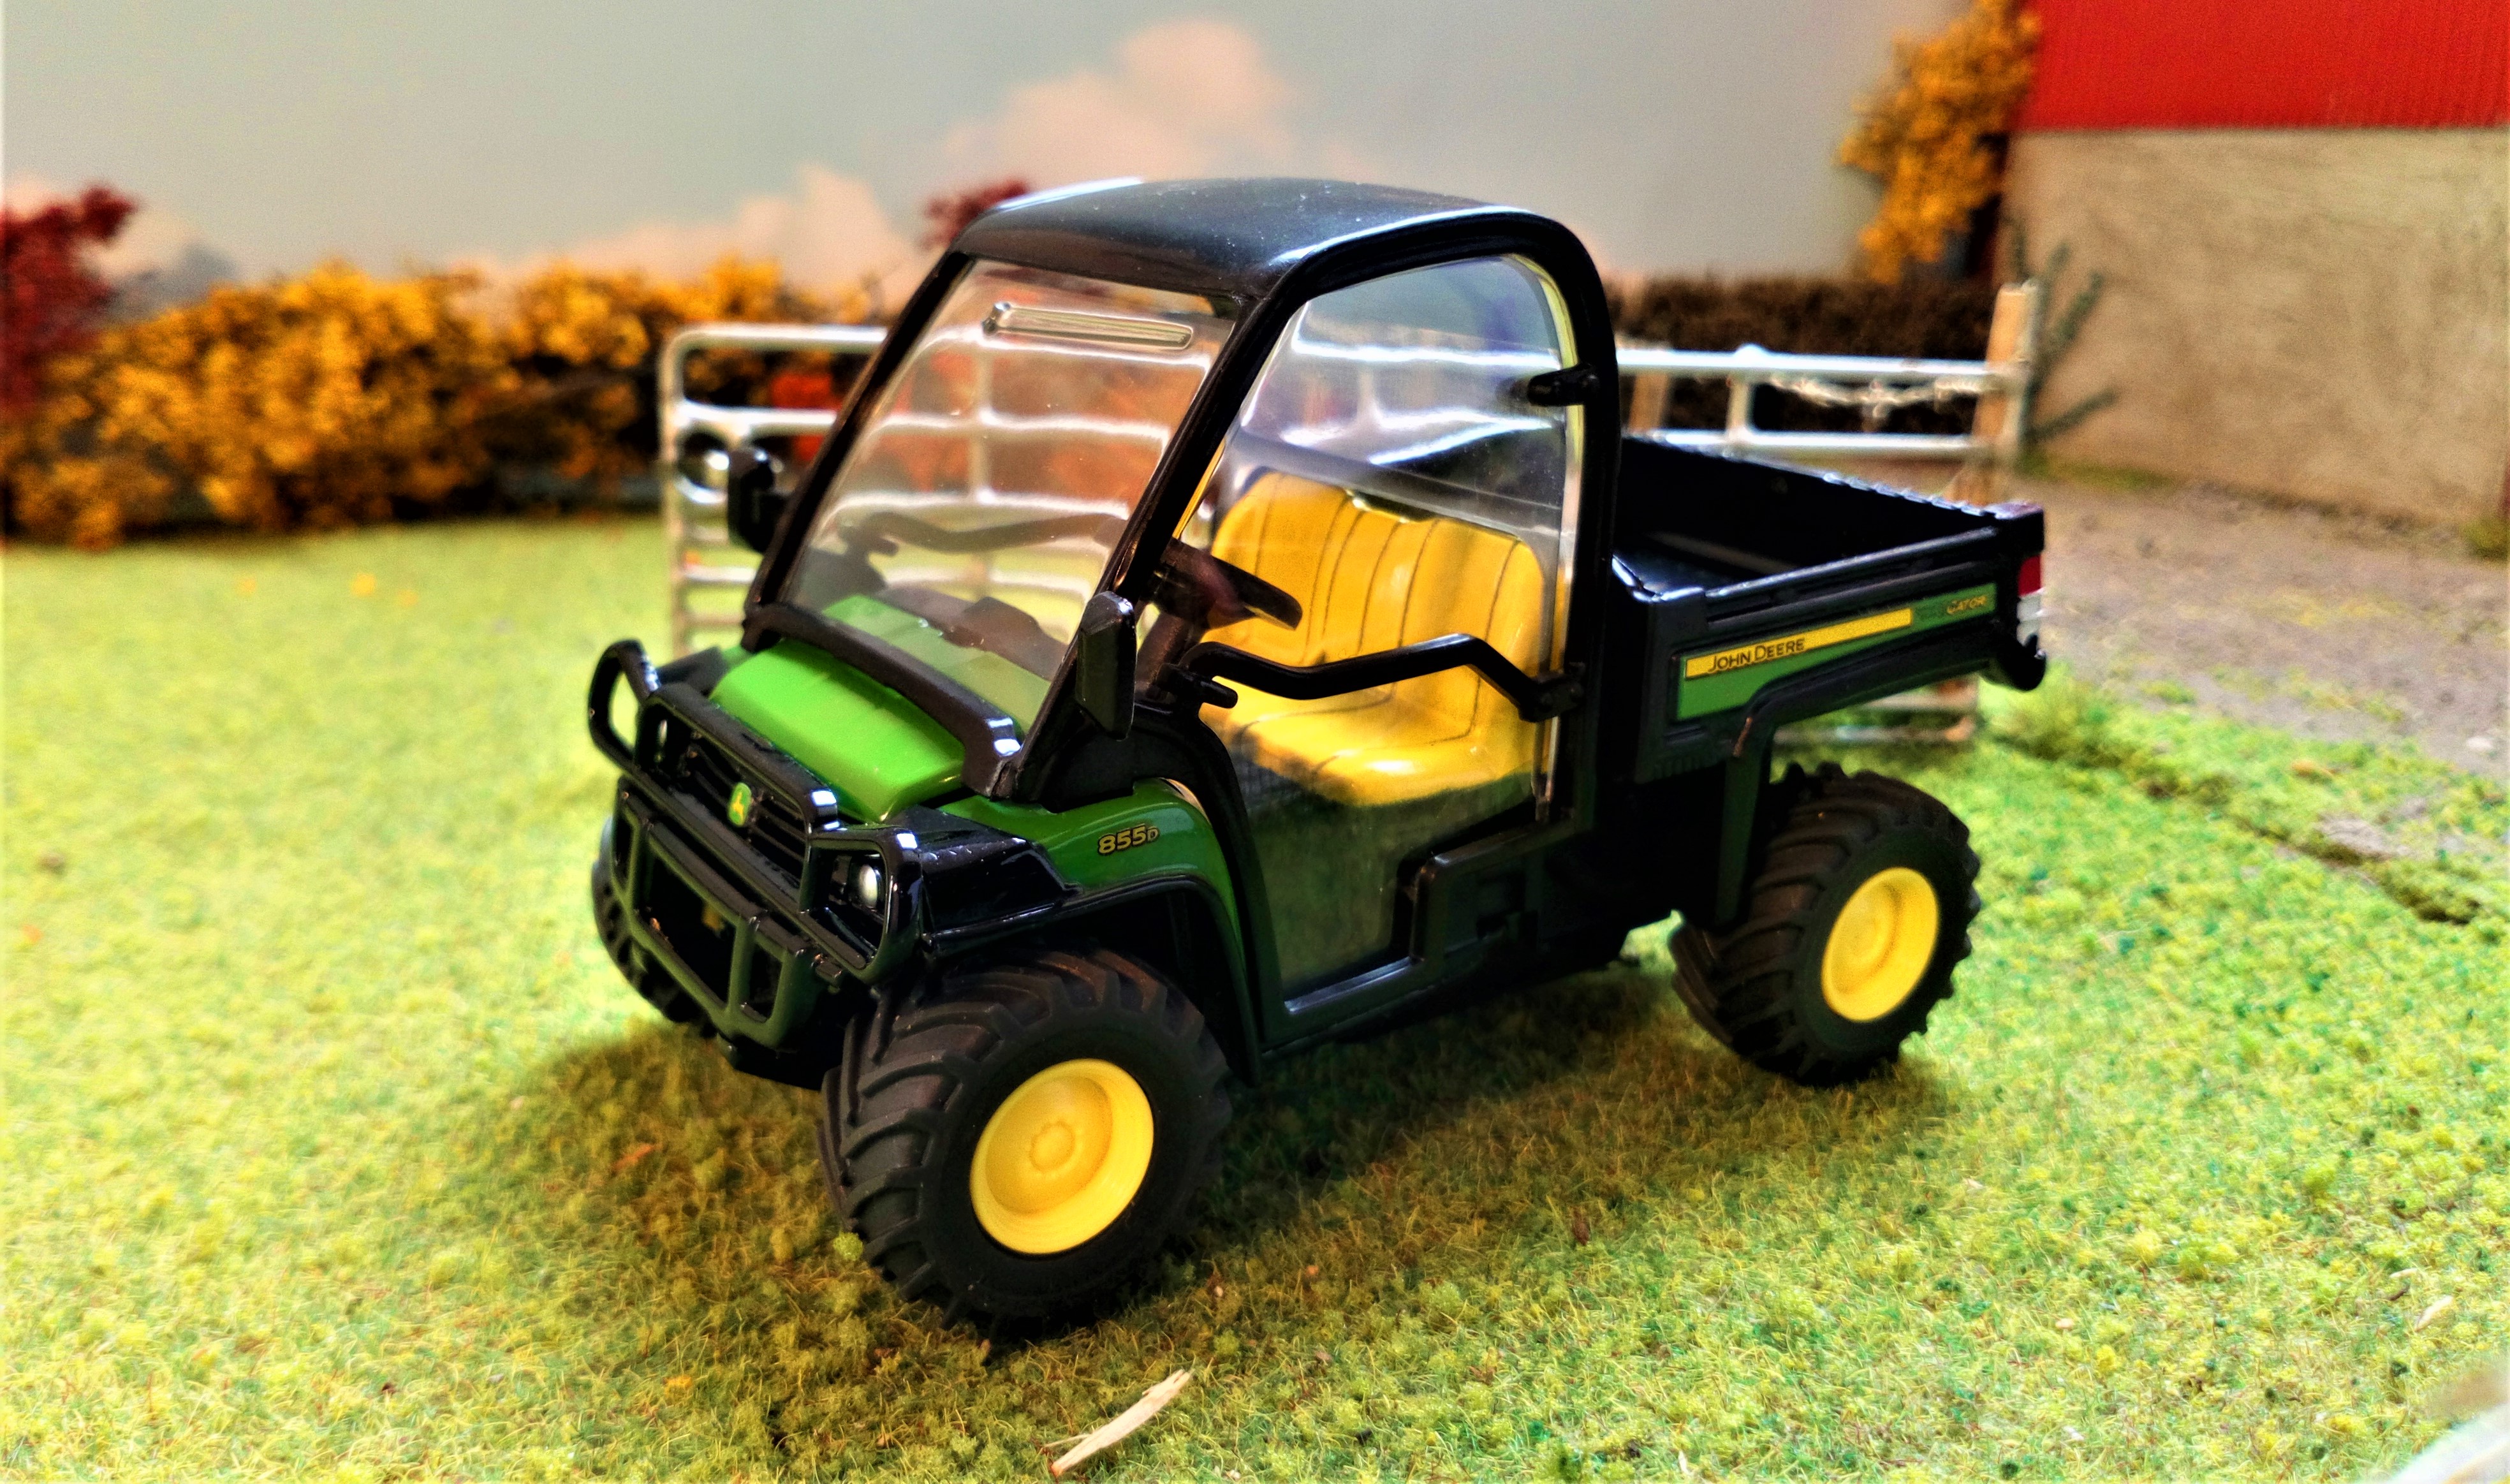 Siku Farmer 3060 1:32 John Deere Gator All-terrain Utility Vehicle Model 